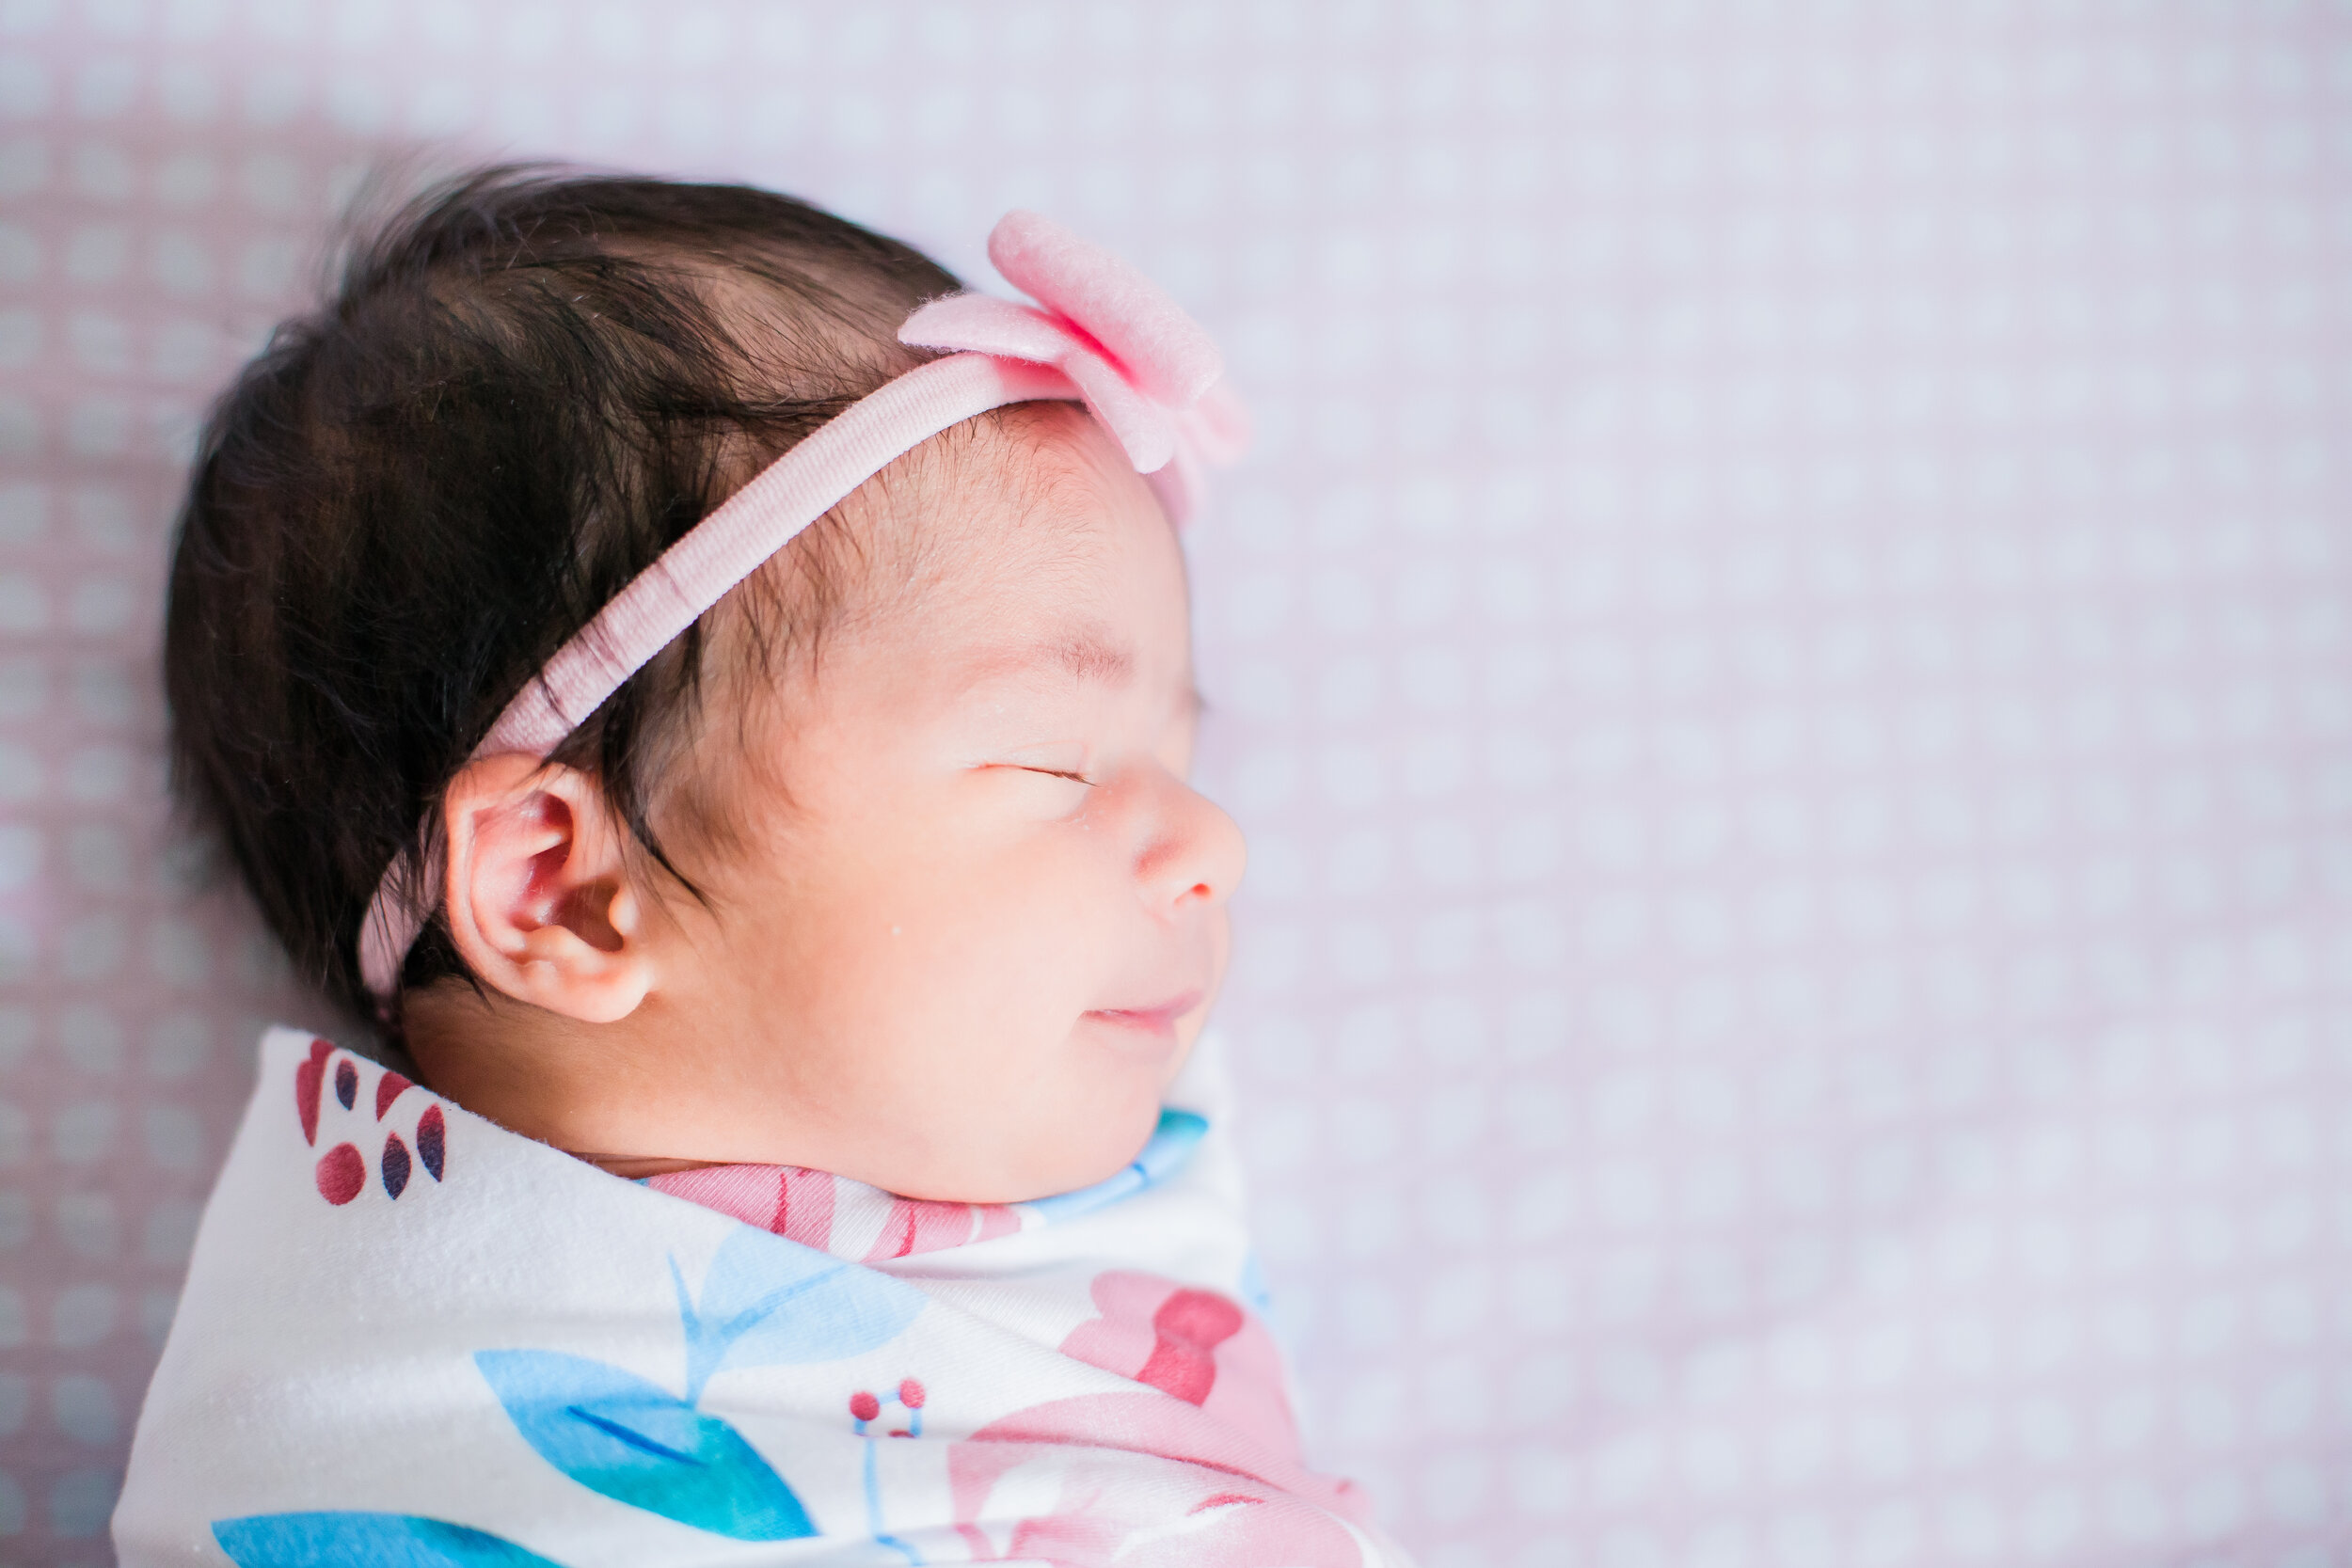 Fresno newborn photograph, baby girl smiling in her sleep